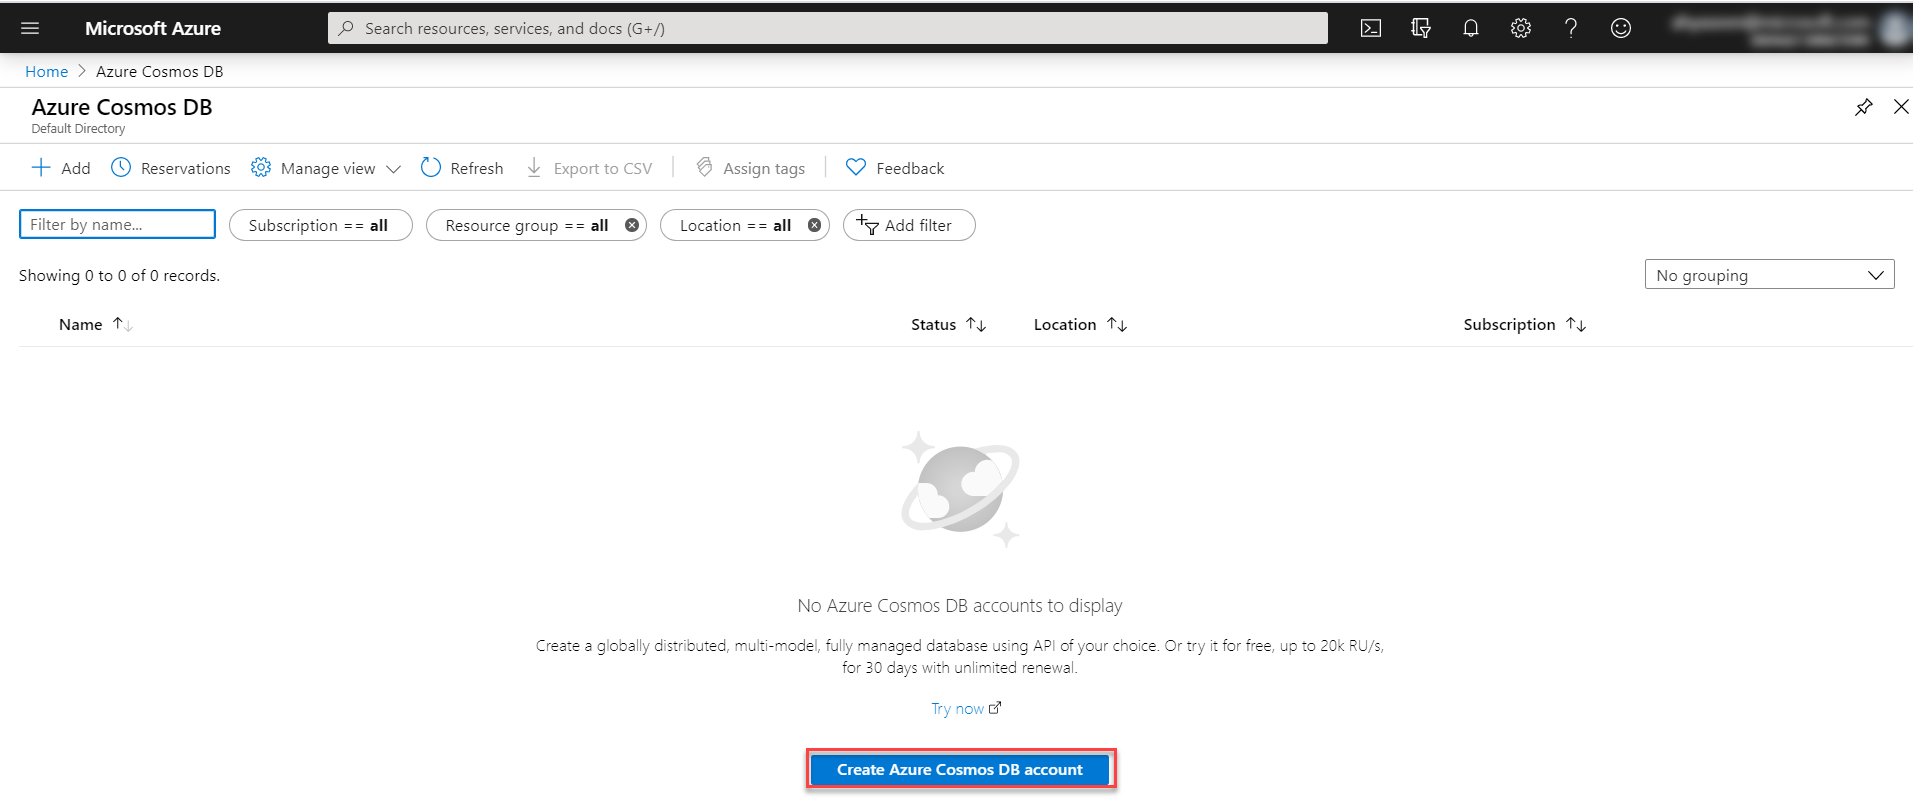 Microsoft Azure portal - Create Azure Cosmos DB